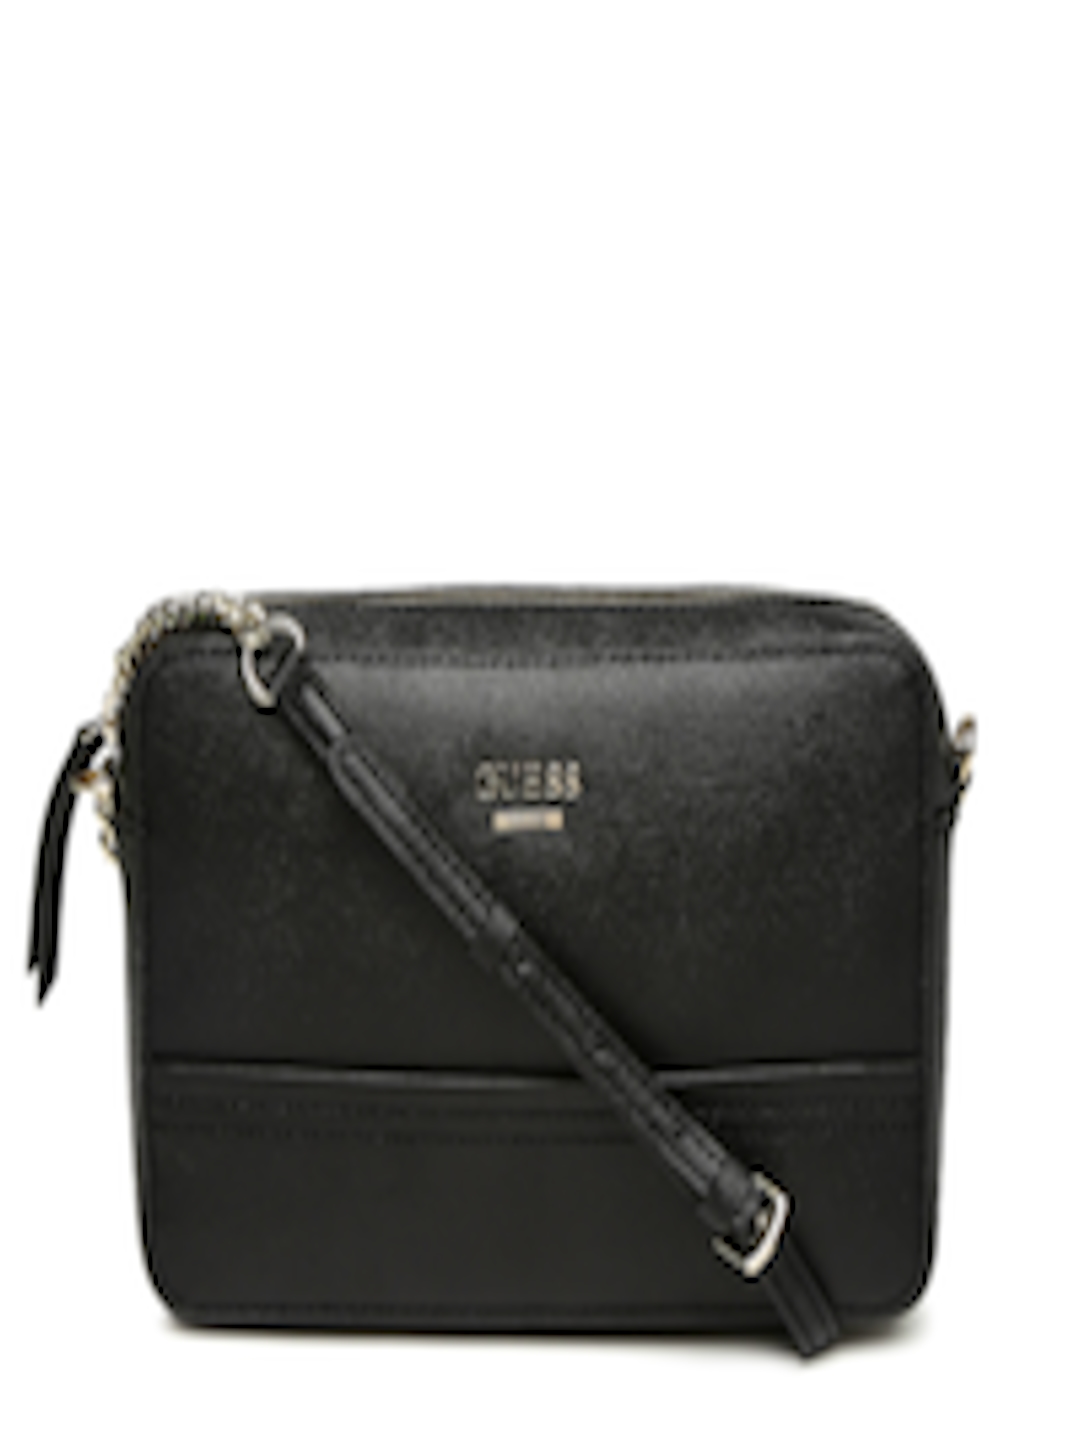 Buy GUESS Black Sling Bag - Handbags for Women 1738129 ...